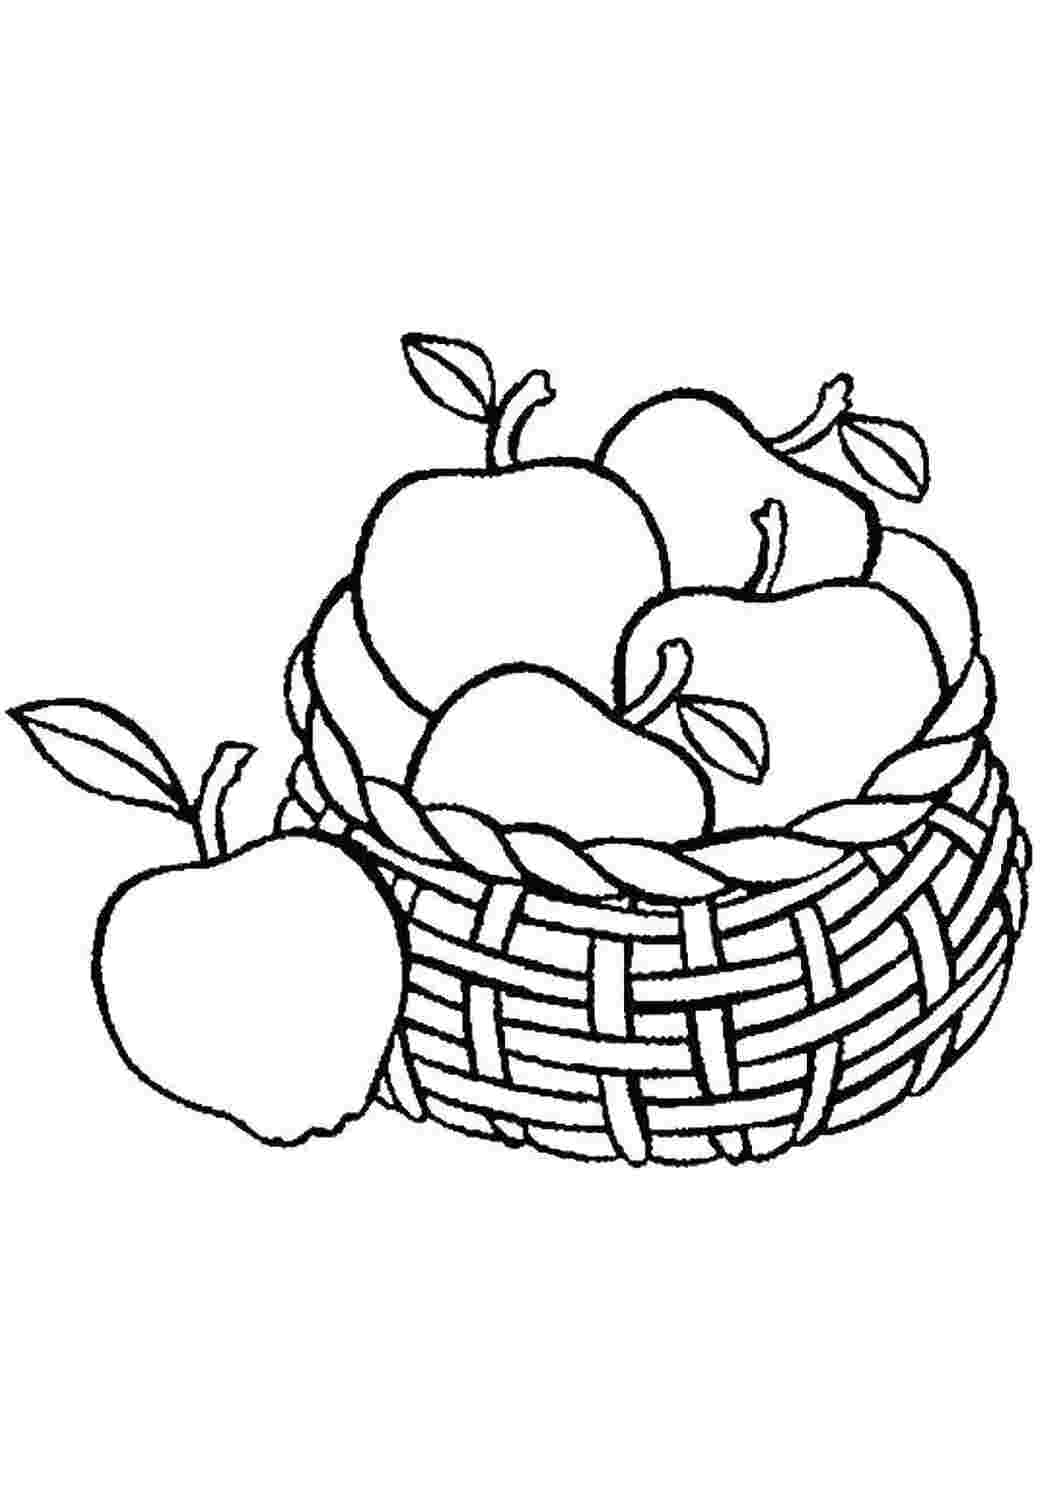 Корзина с яблоками рисование